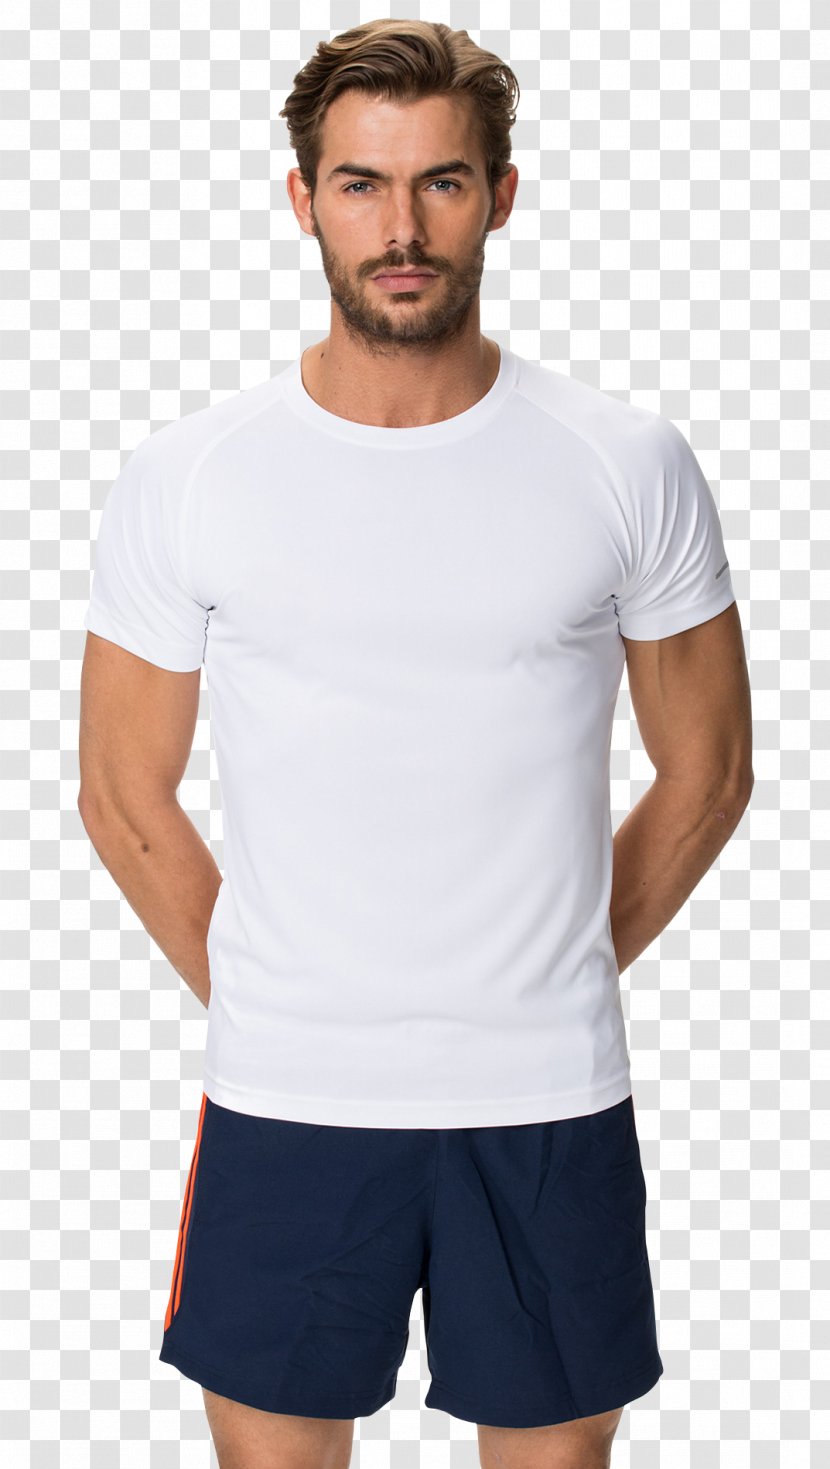 T-shirt Sportswear Clothing - Shoulder - Sports Wear Transparent PNG